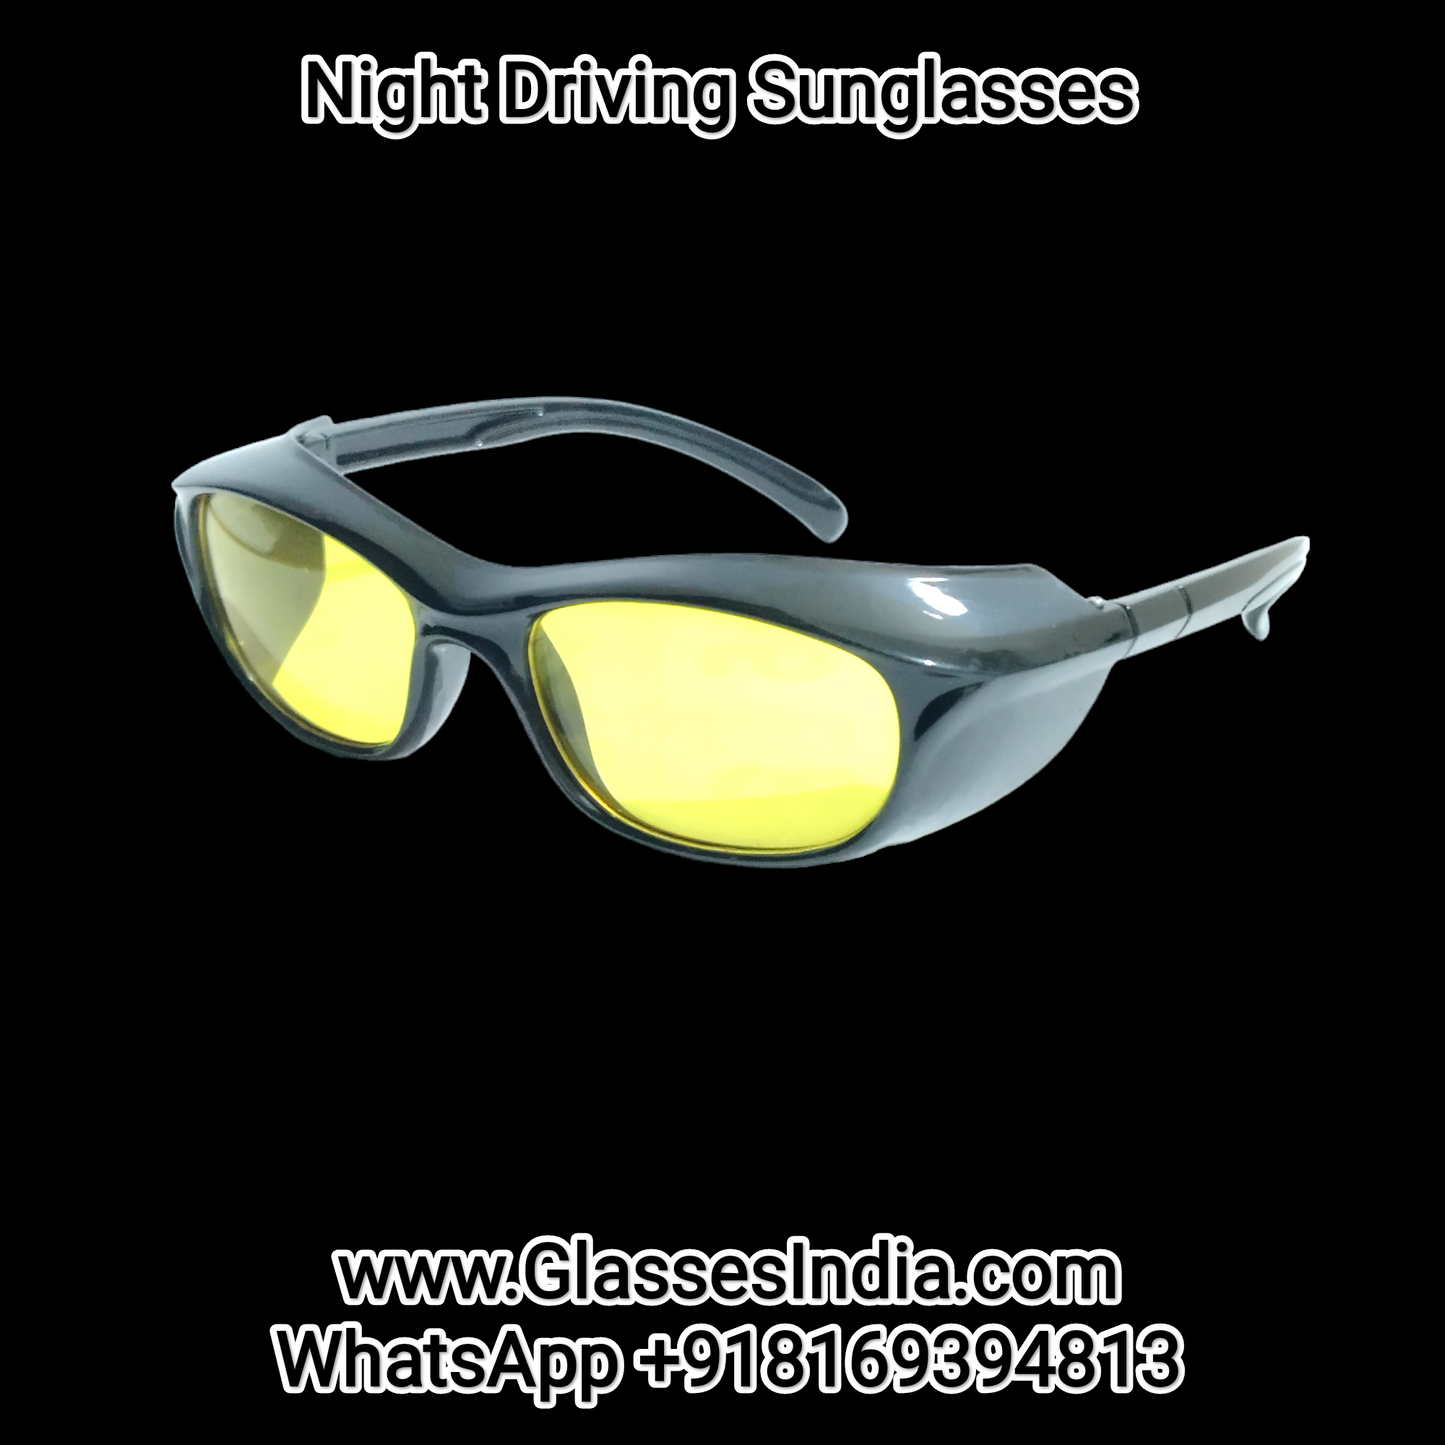 Night Driving Sunglasses